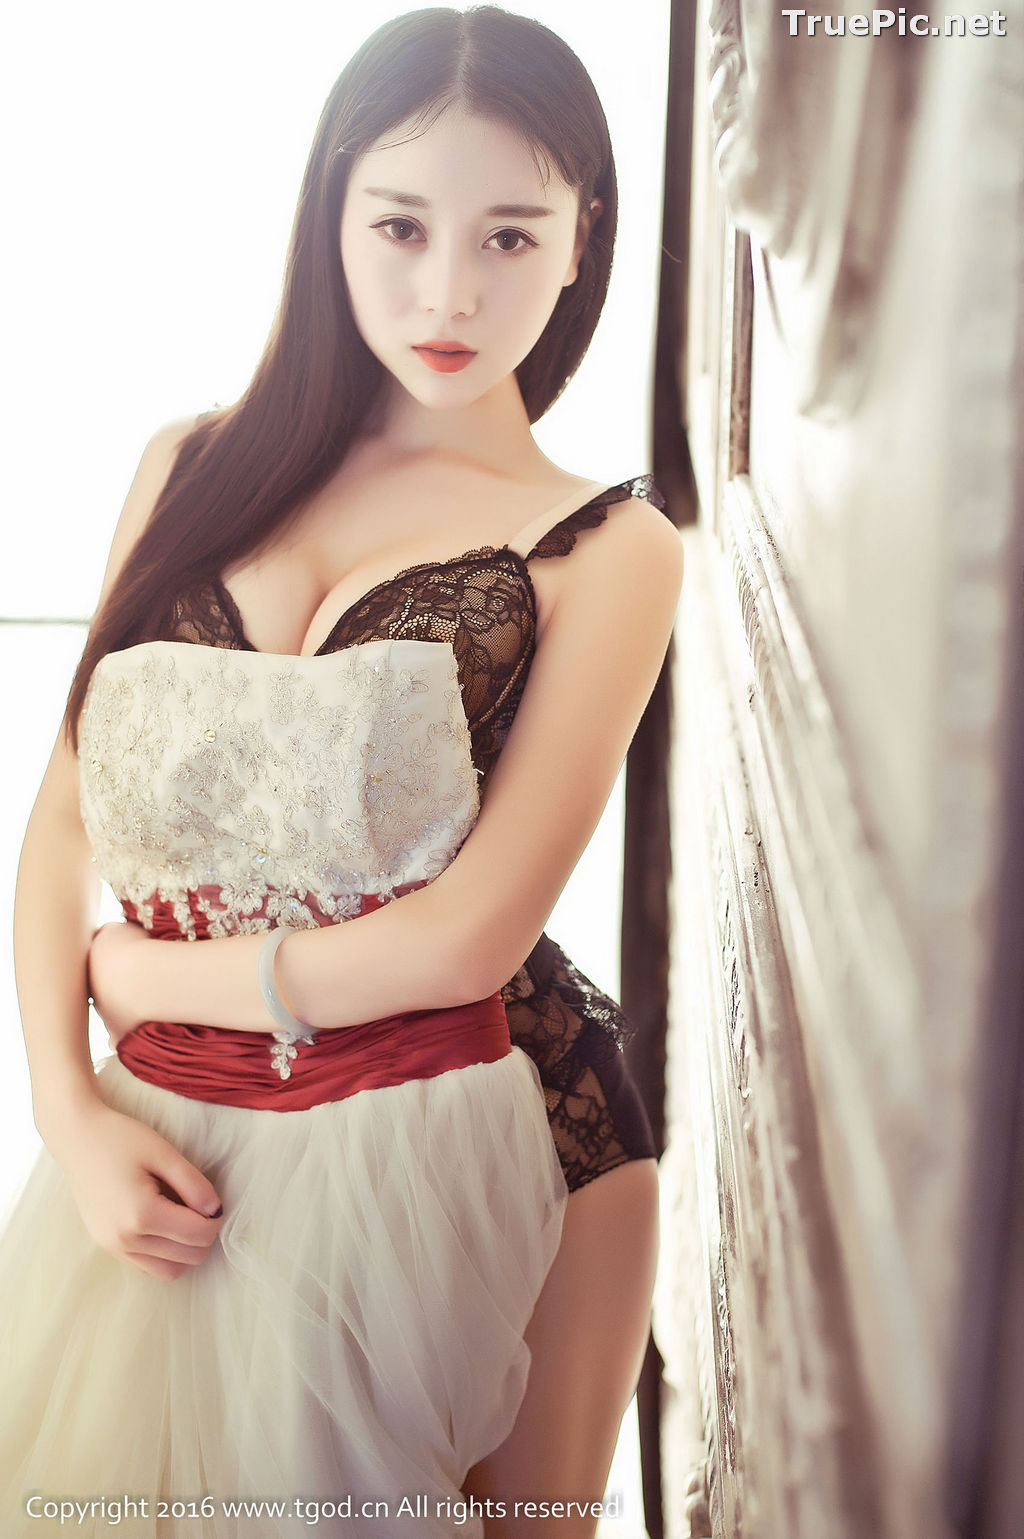 Image TGOD Photo Album – Chinese Model - Kitty Zhao Xiaomi (赵小米) - TruePic.net - Picture-64